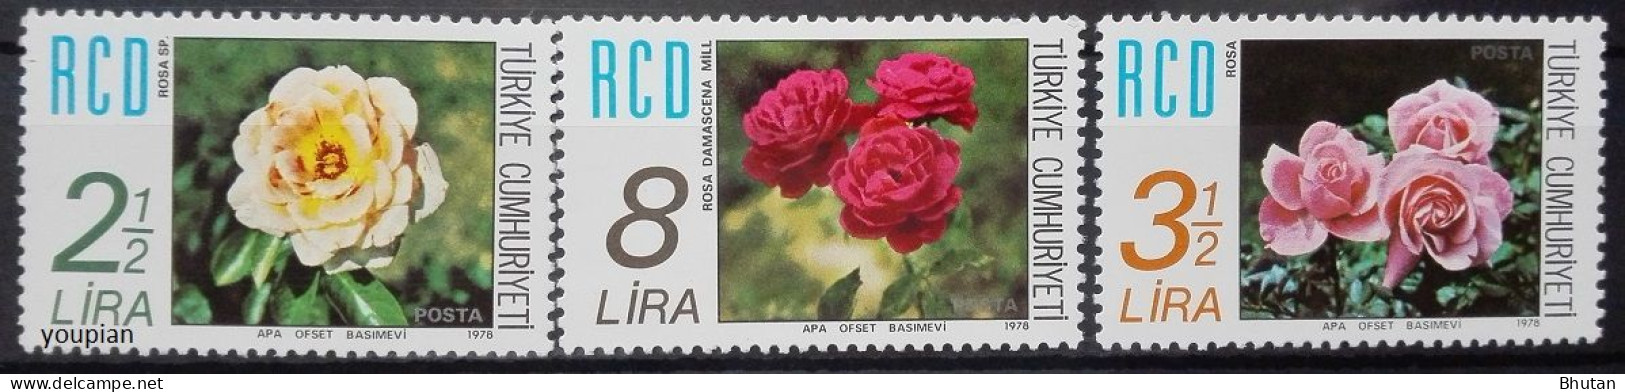 Türkiye 1978, RCD - Rose From Türkiye, Iran And Pakistan, MNH Stamps Set - Unused Stamps